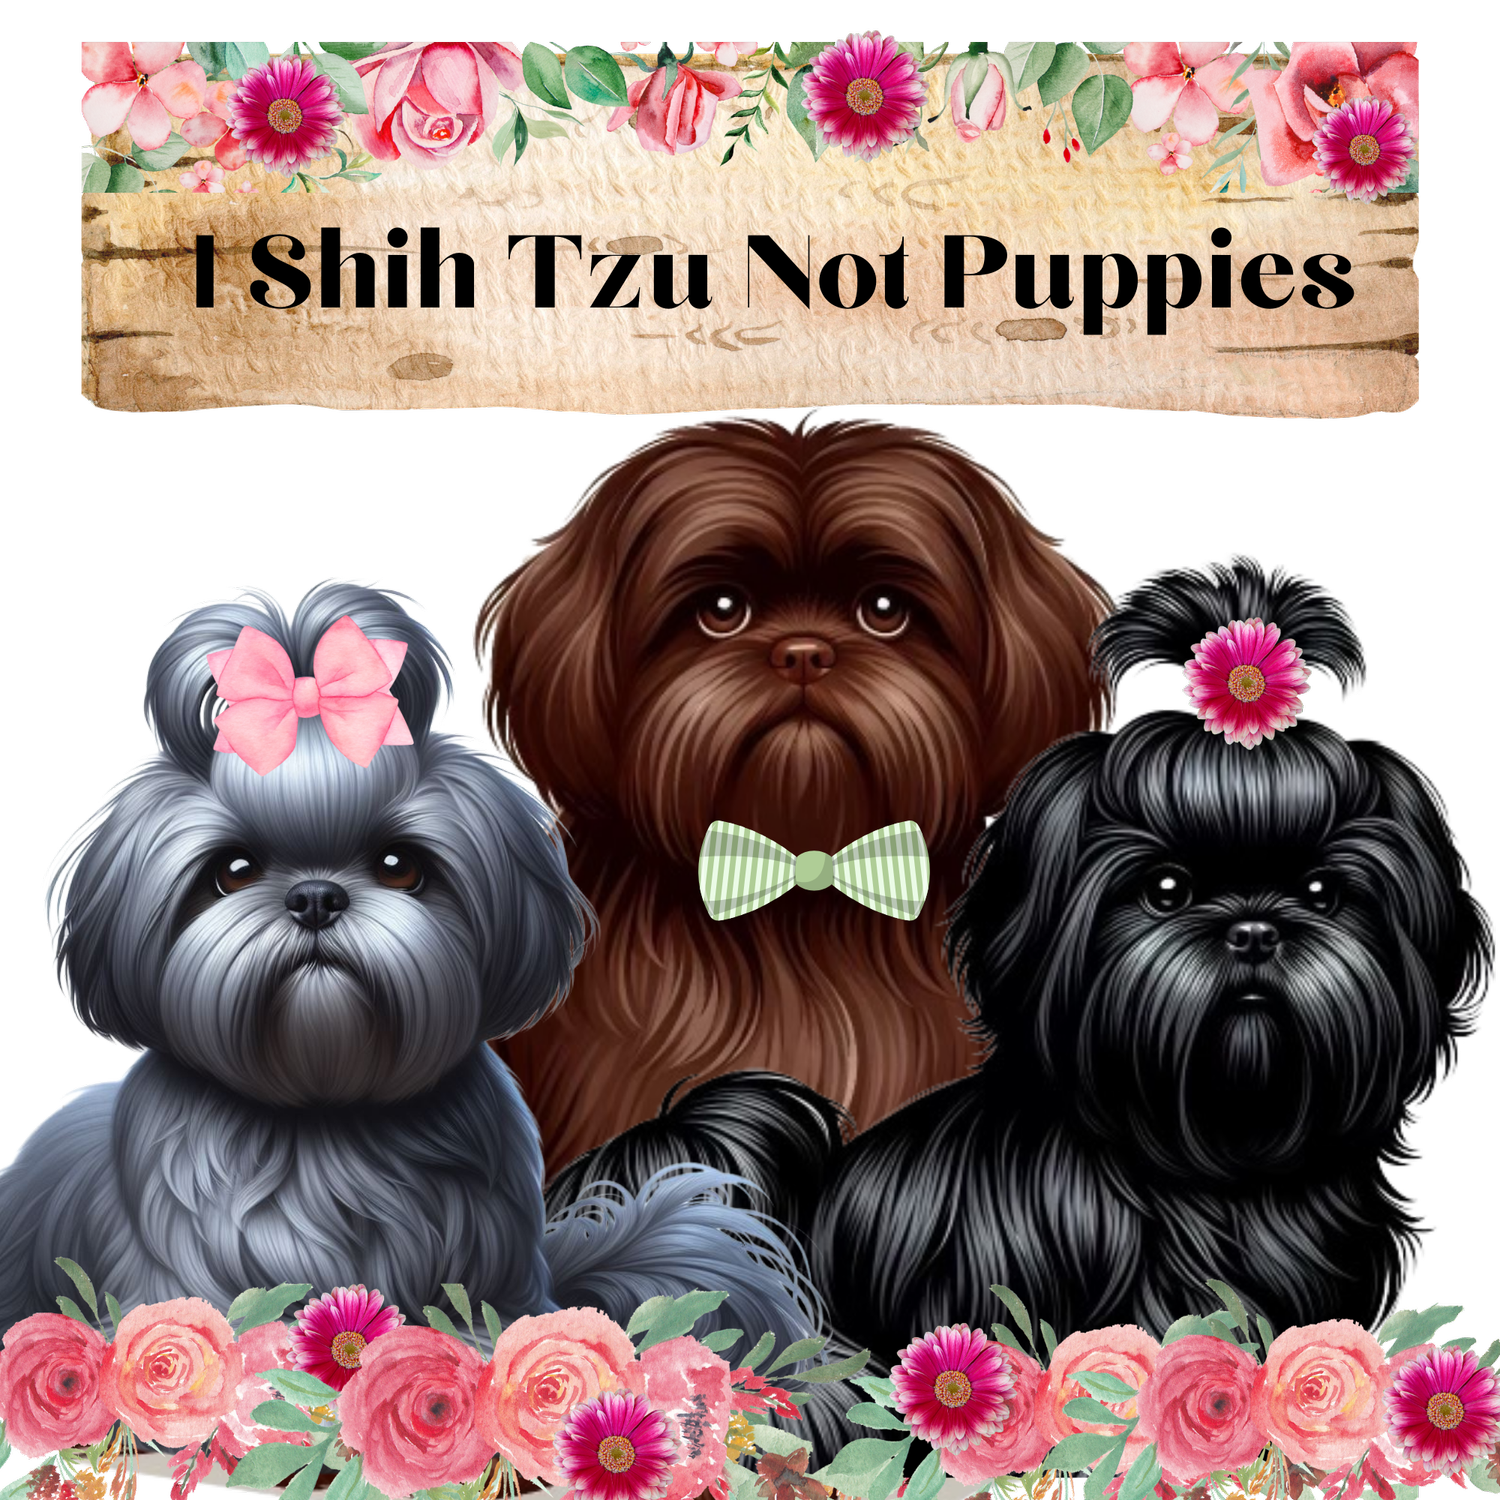 I Shih Tzu Not Puppies